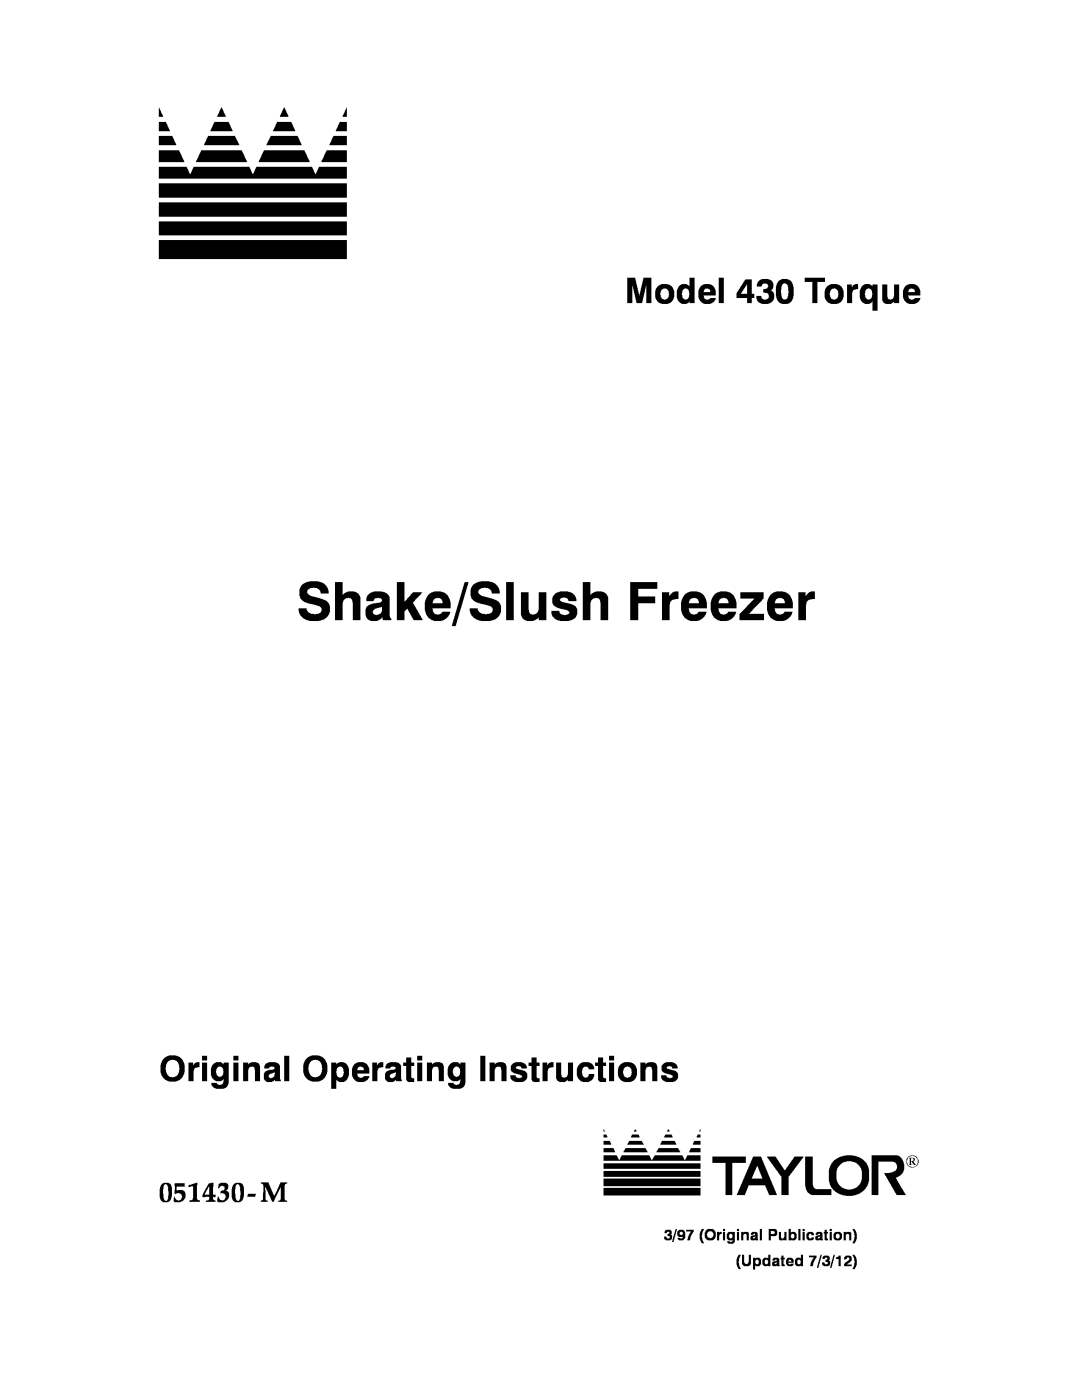 Taylor 430 TORQUE manual Shake/Slush Freezer, Model 430 Torque, Original Operating Instructions, 051430- M 